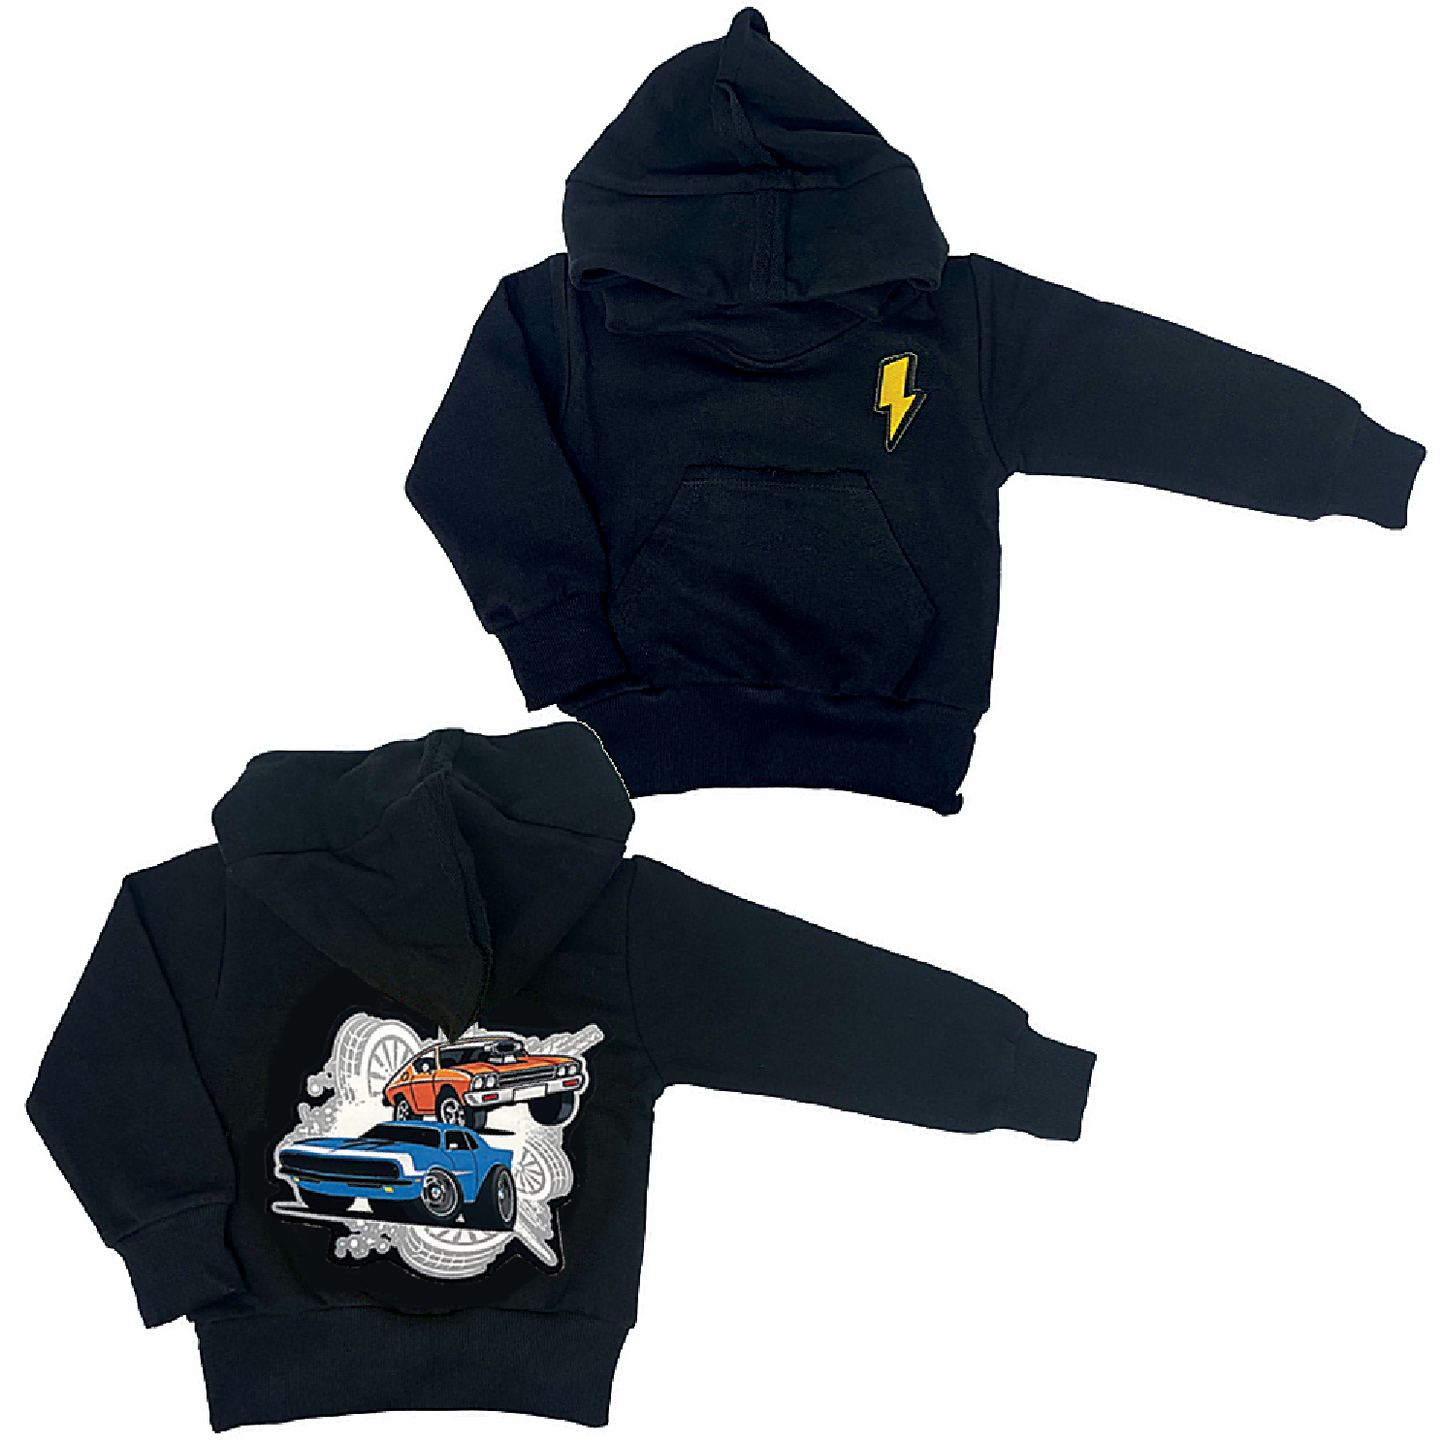 Speed Racer Black Pullover - Unisex for Boys and Girls